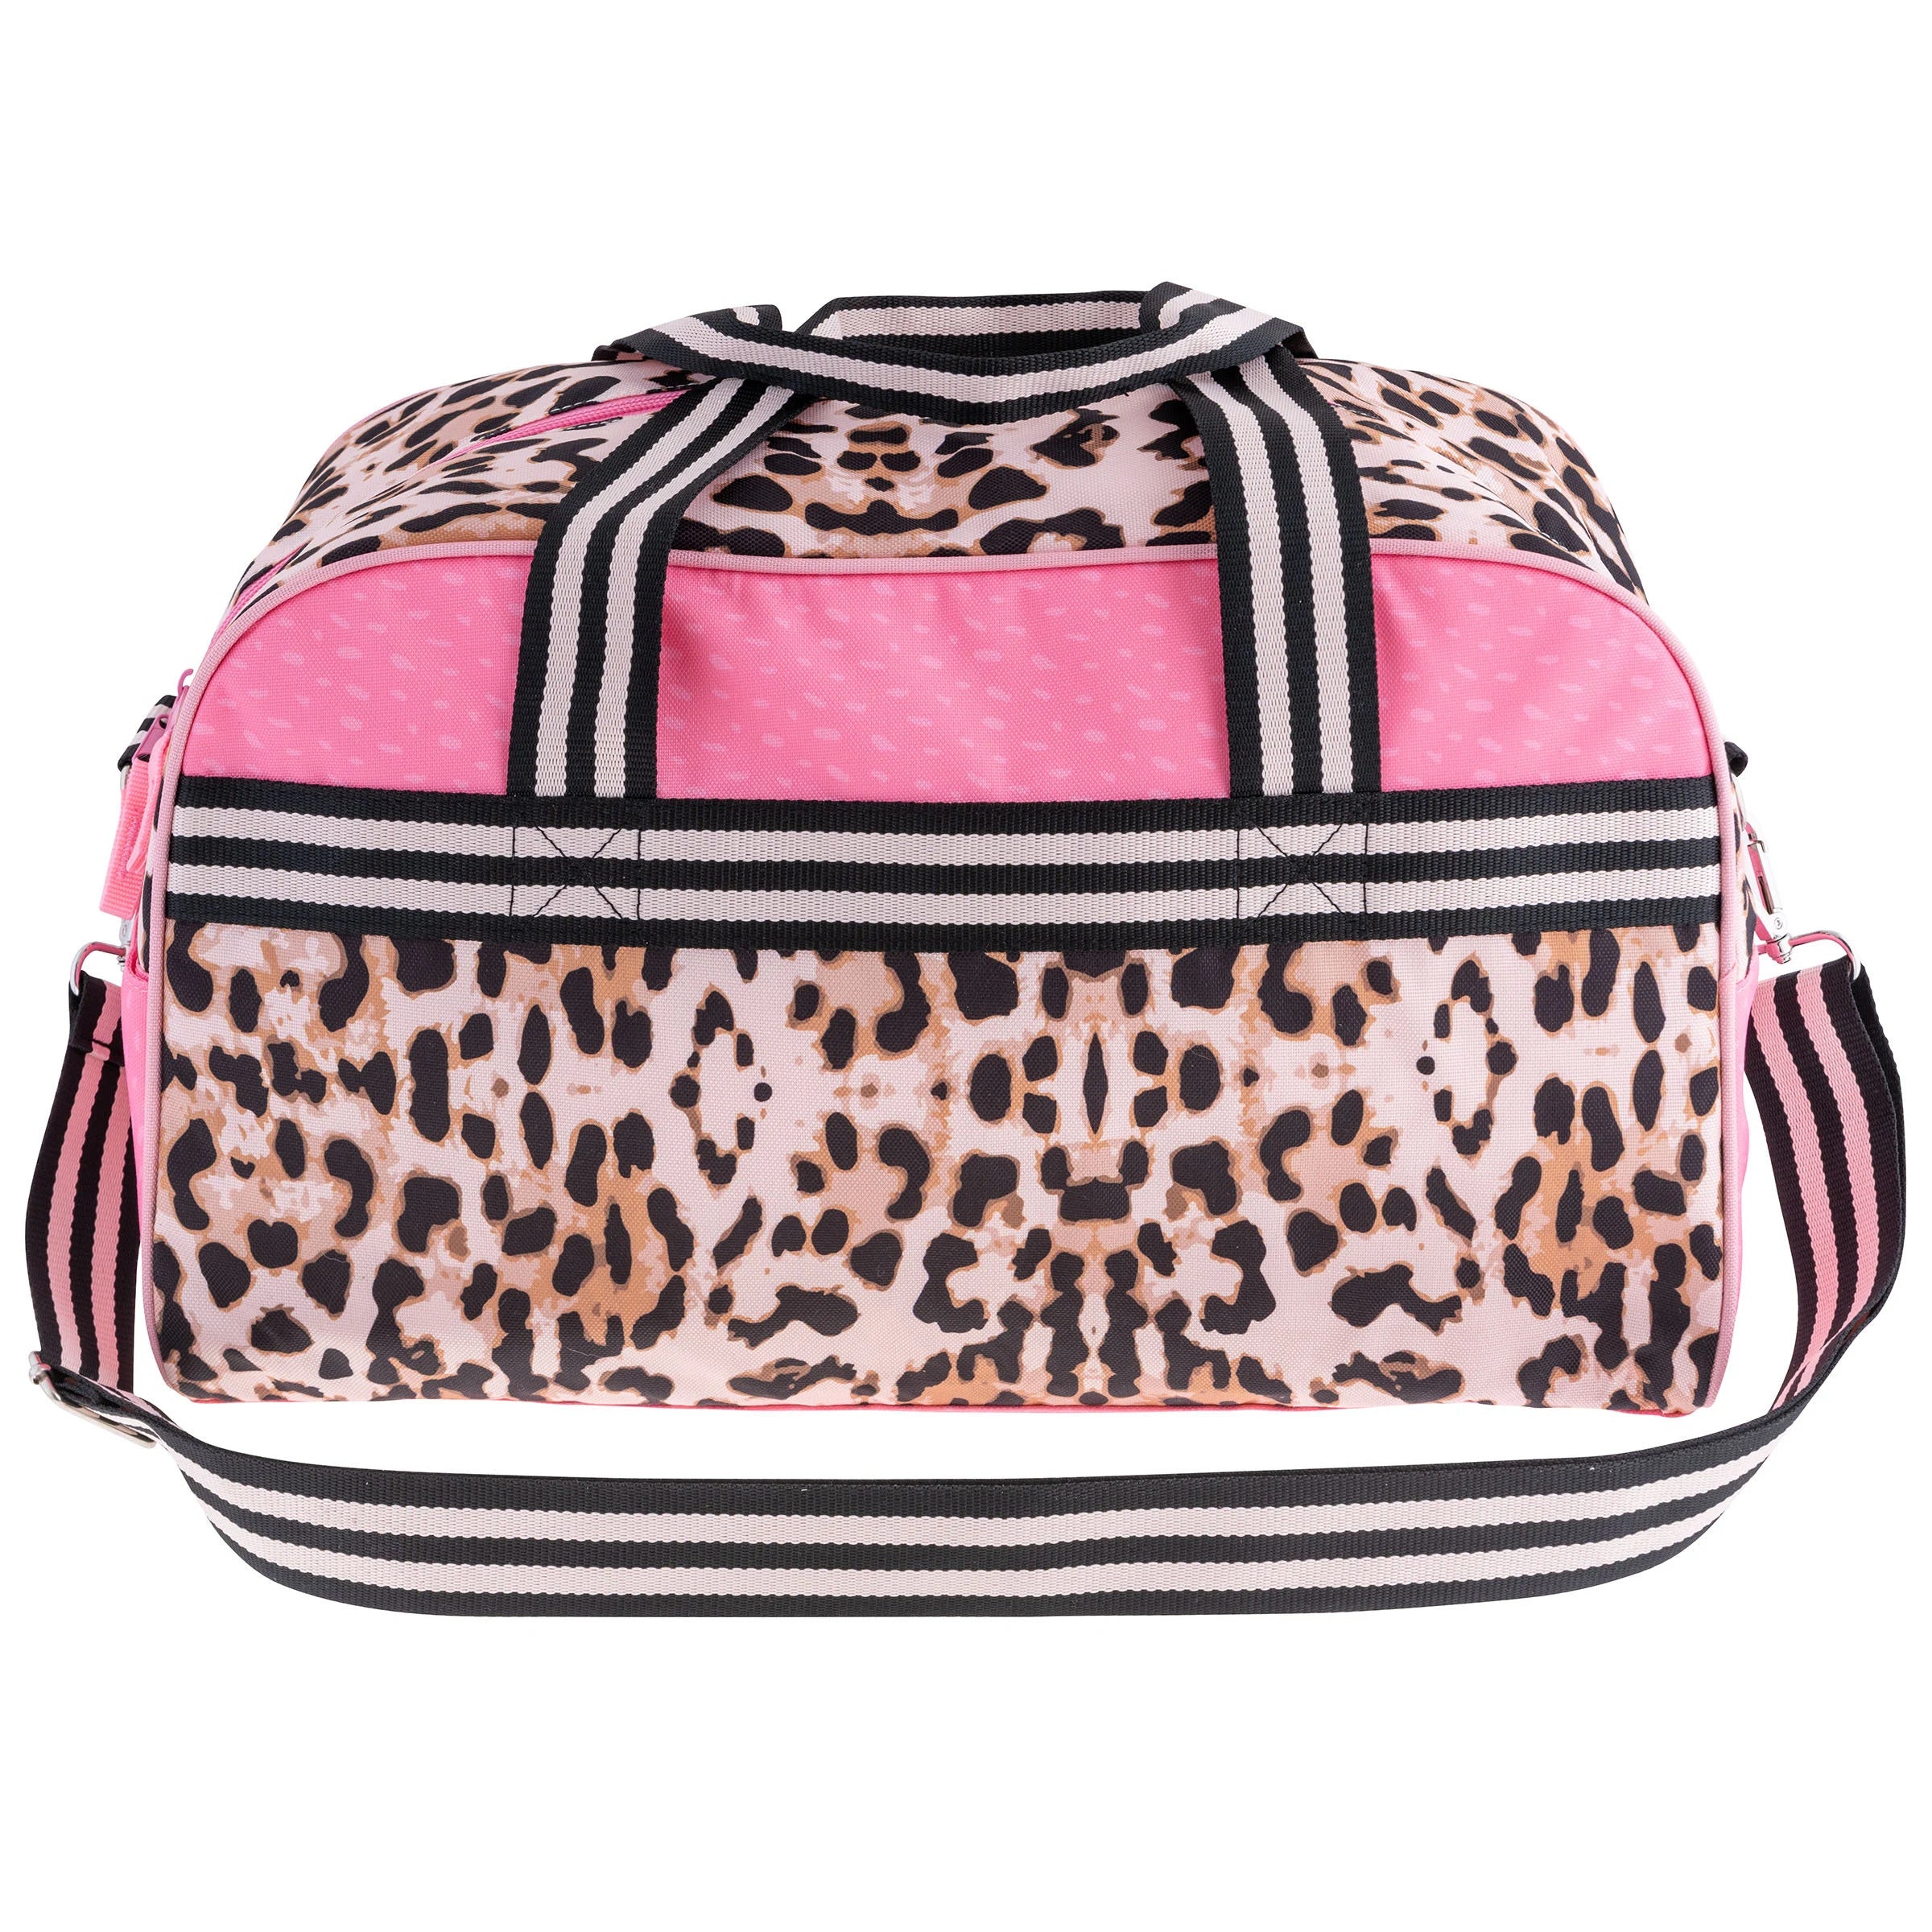 Personalized Duffle Bag - Leopard